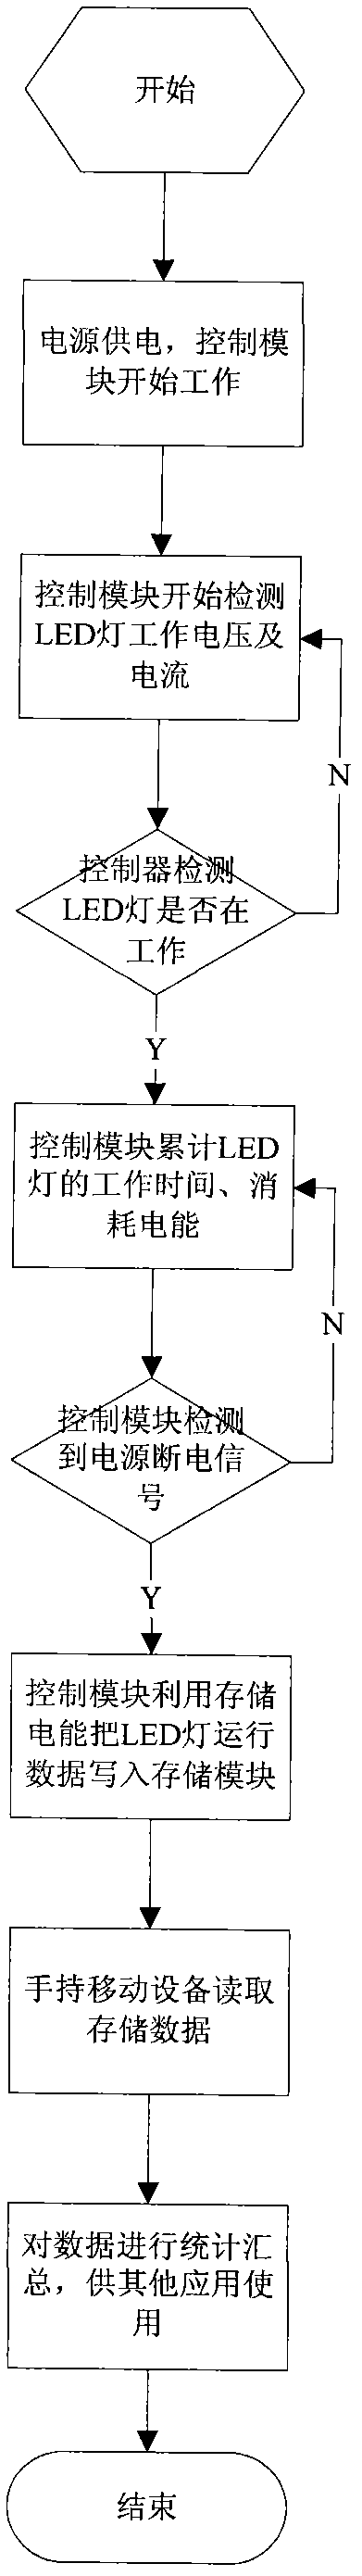 Non-volatile LED (Light Emitting Diode) lamp operation data recording method based on Internet of things